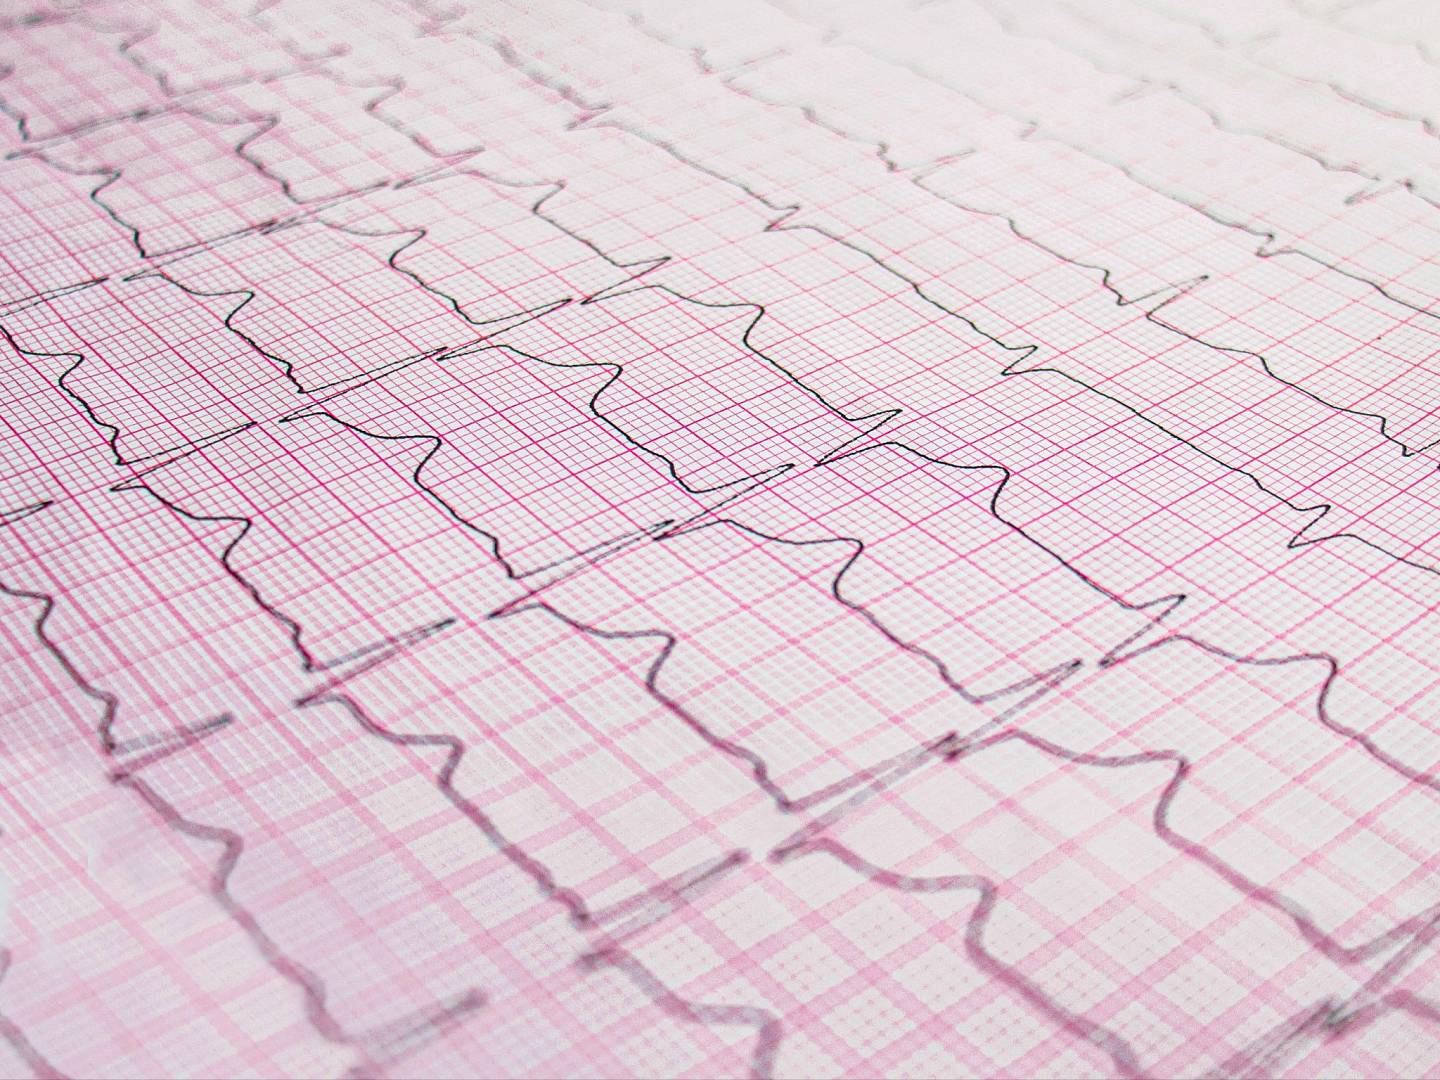 wykres EKG